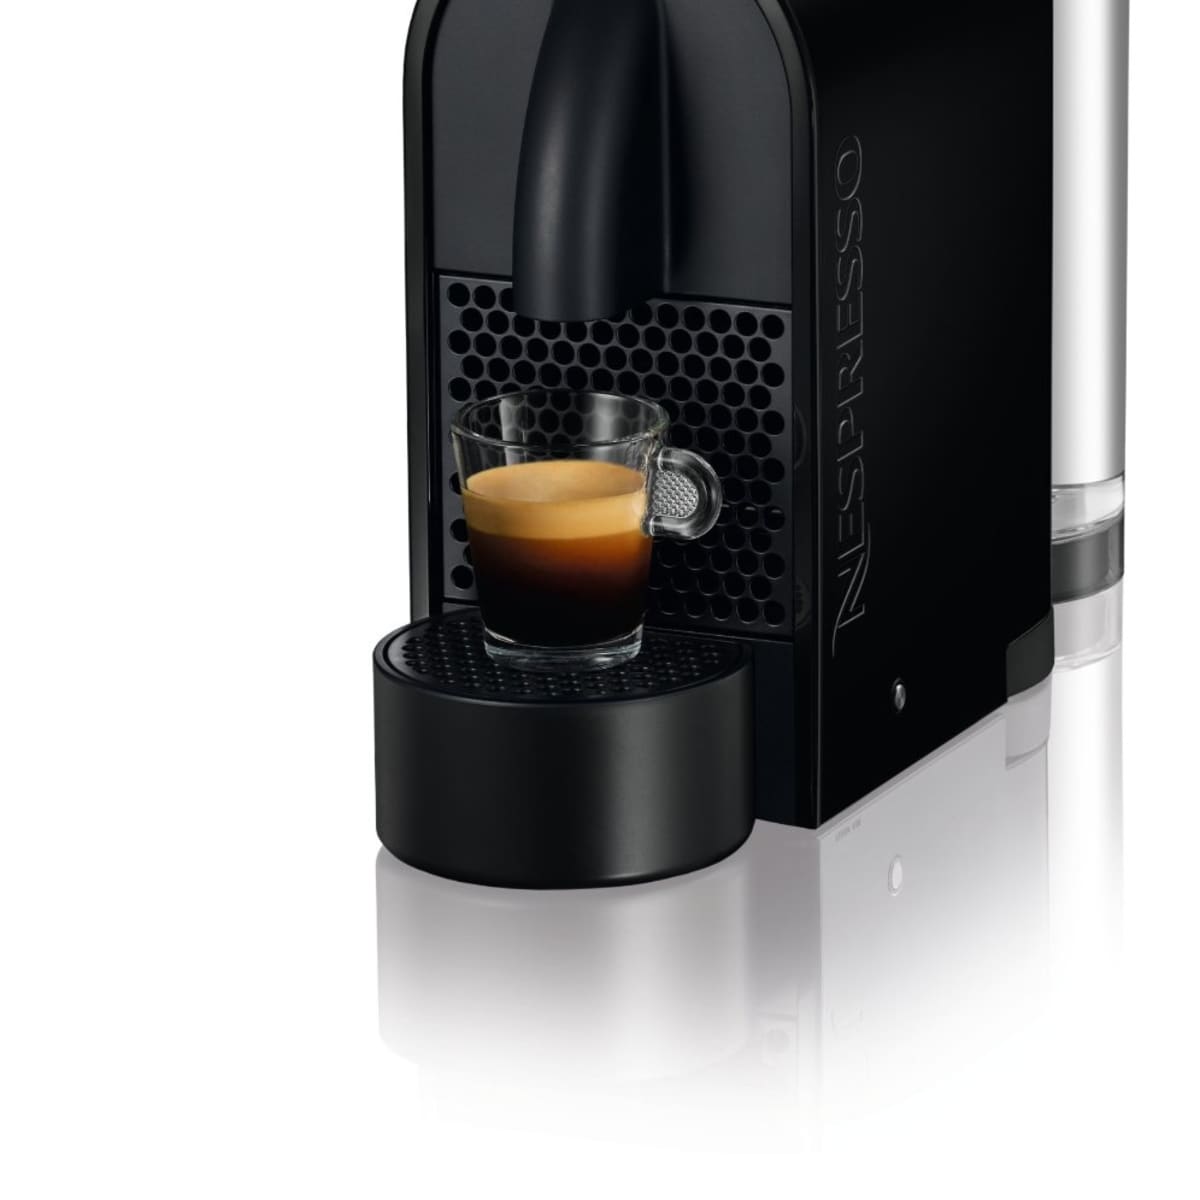 Reusing Nespresso U Espresso Machine Capsules When Other - Delishably